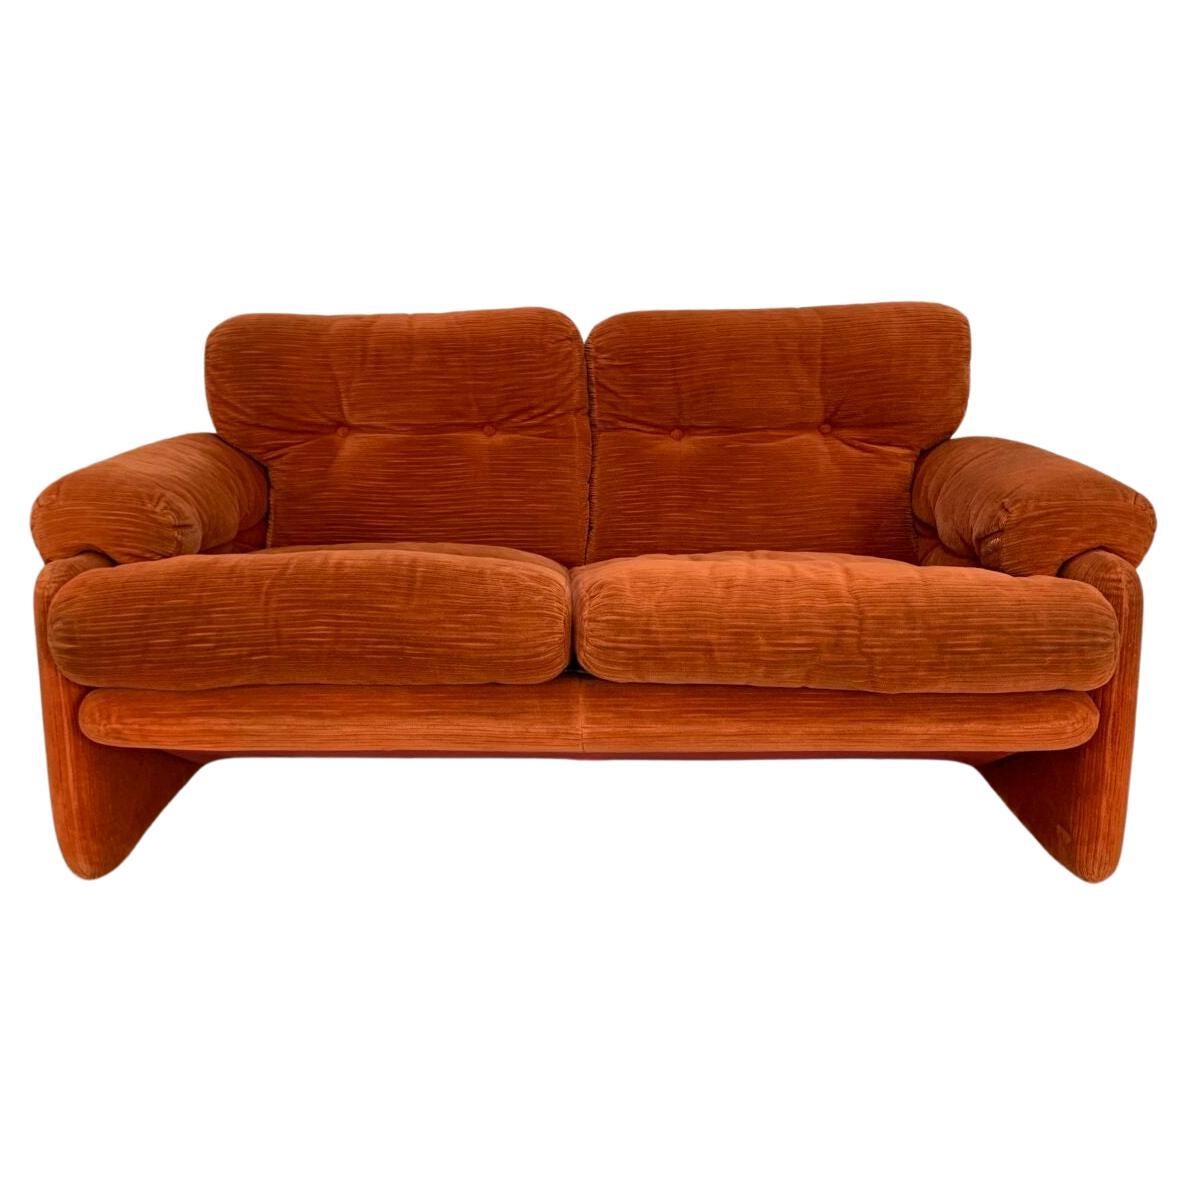 B&B Italia "Coronado" 2-Seat Sofa - In Orange Velvet - RRP £6000